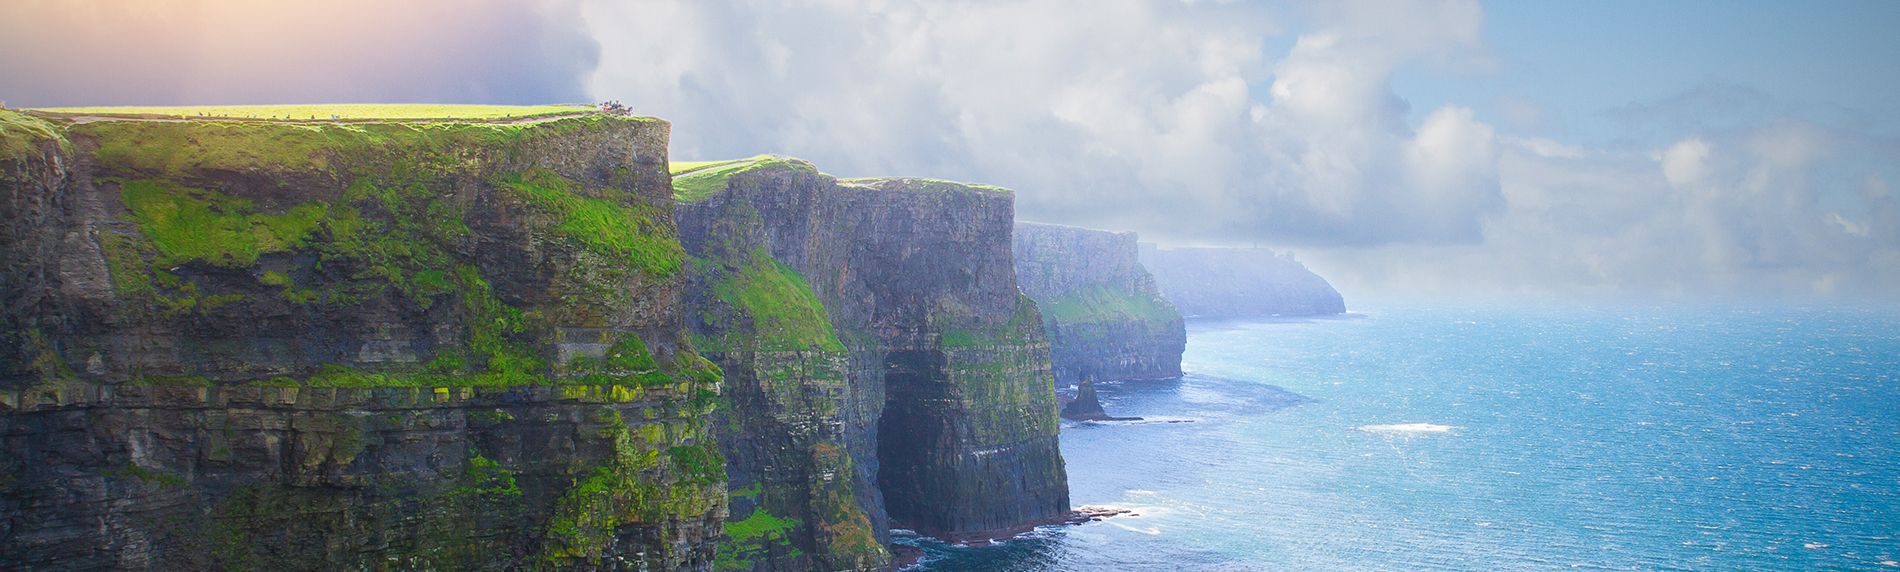 Cliffs of Moher, West Coast of Ireland